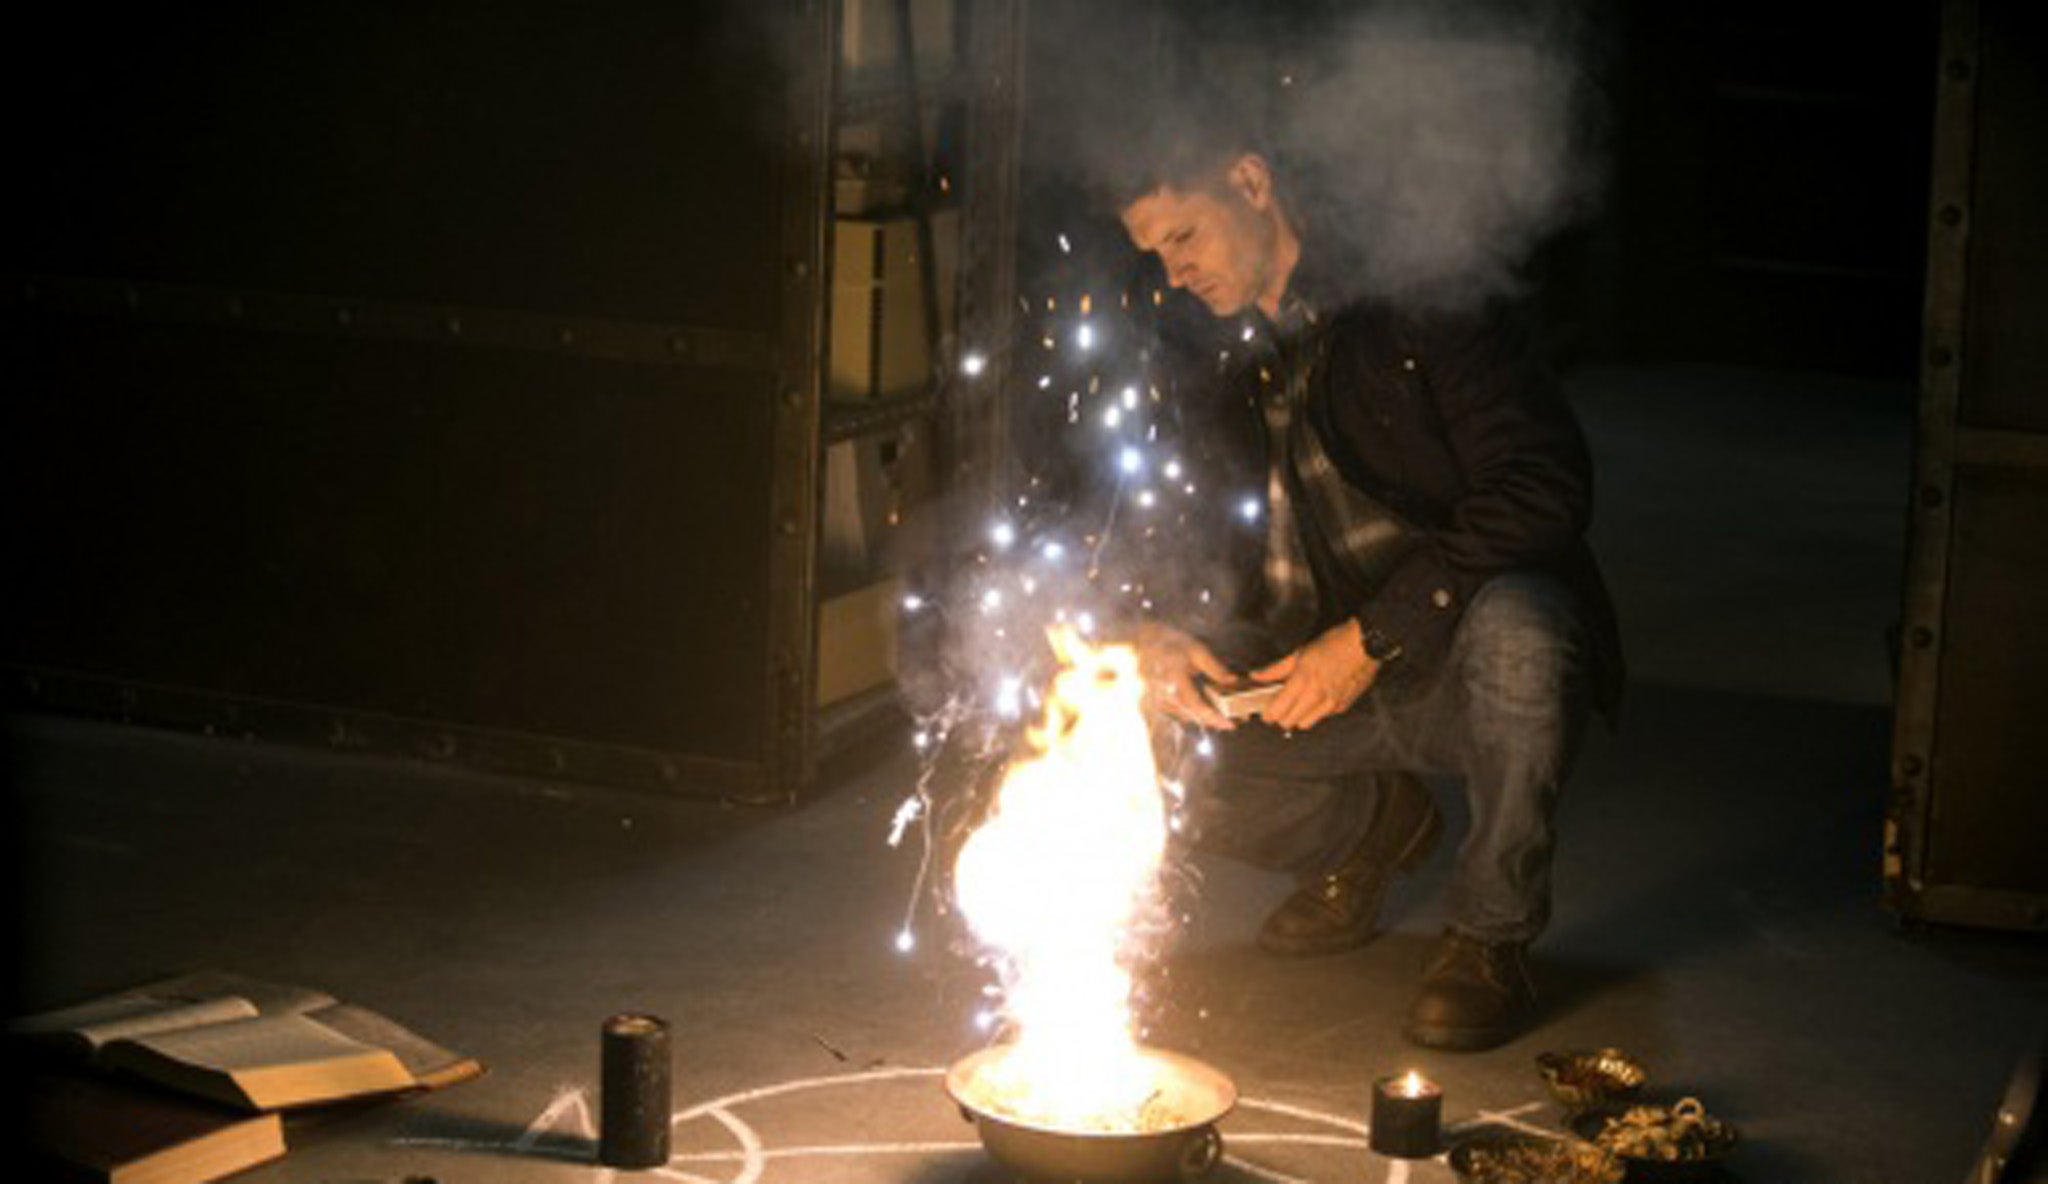 Jensen Ackles plays Dean in CW's 'Supernatural'